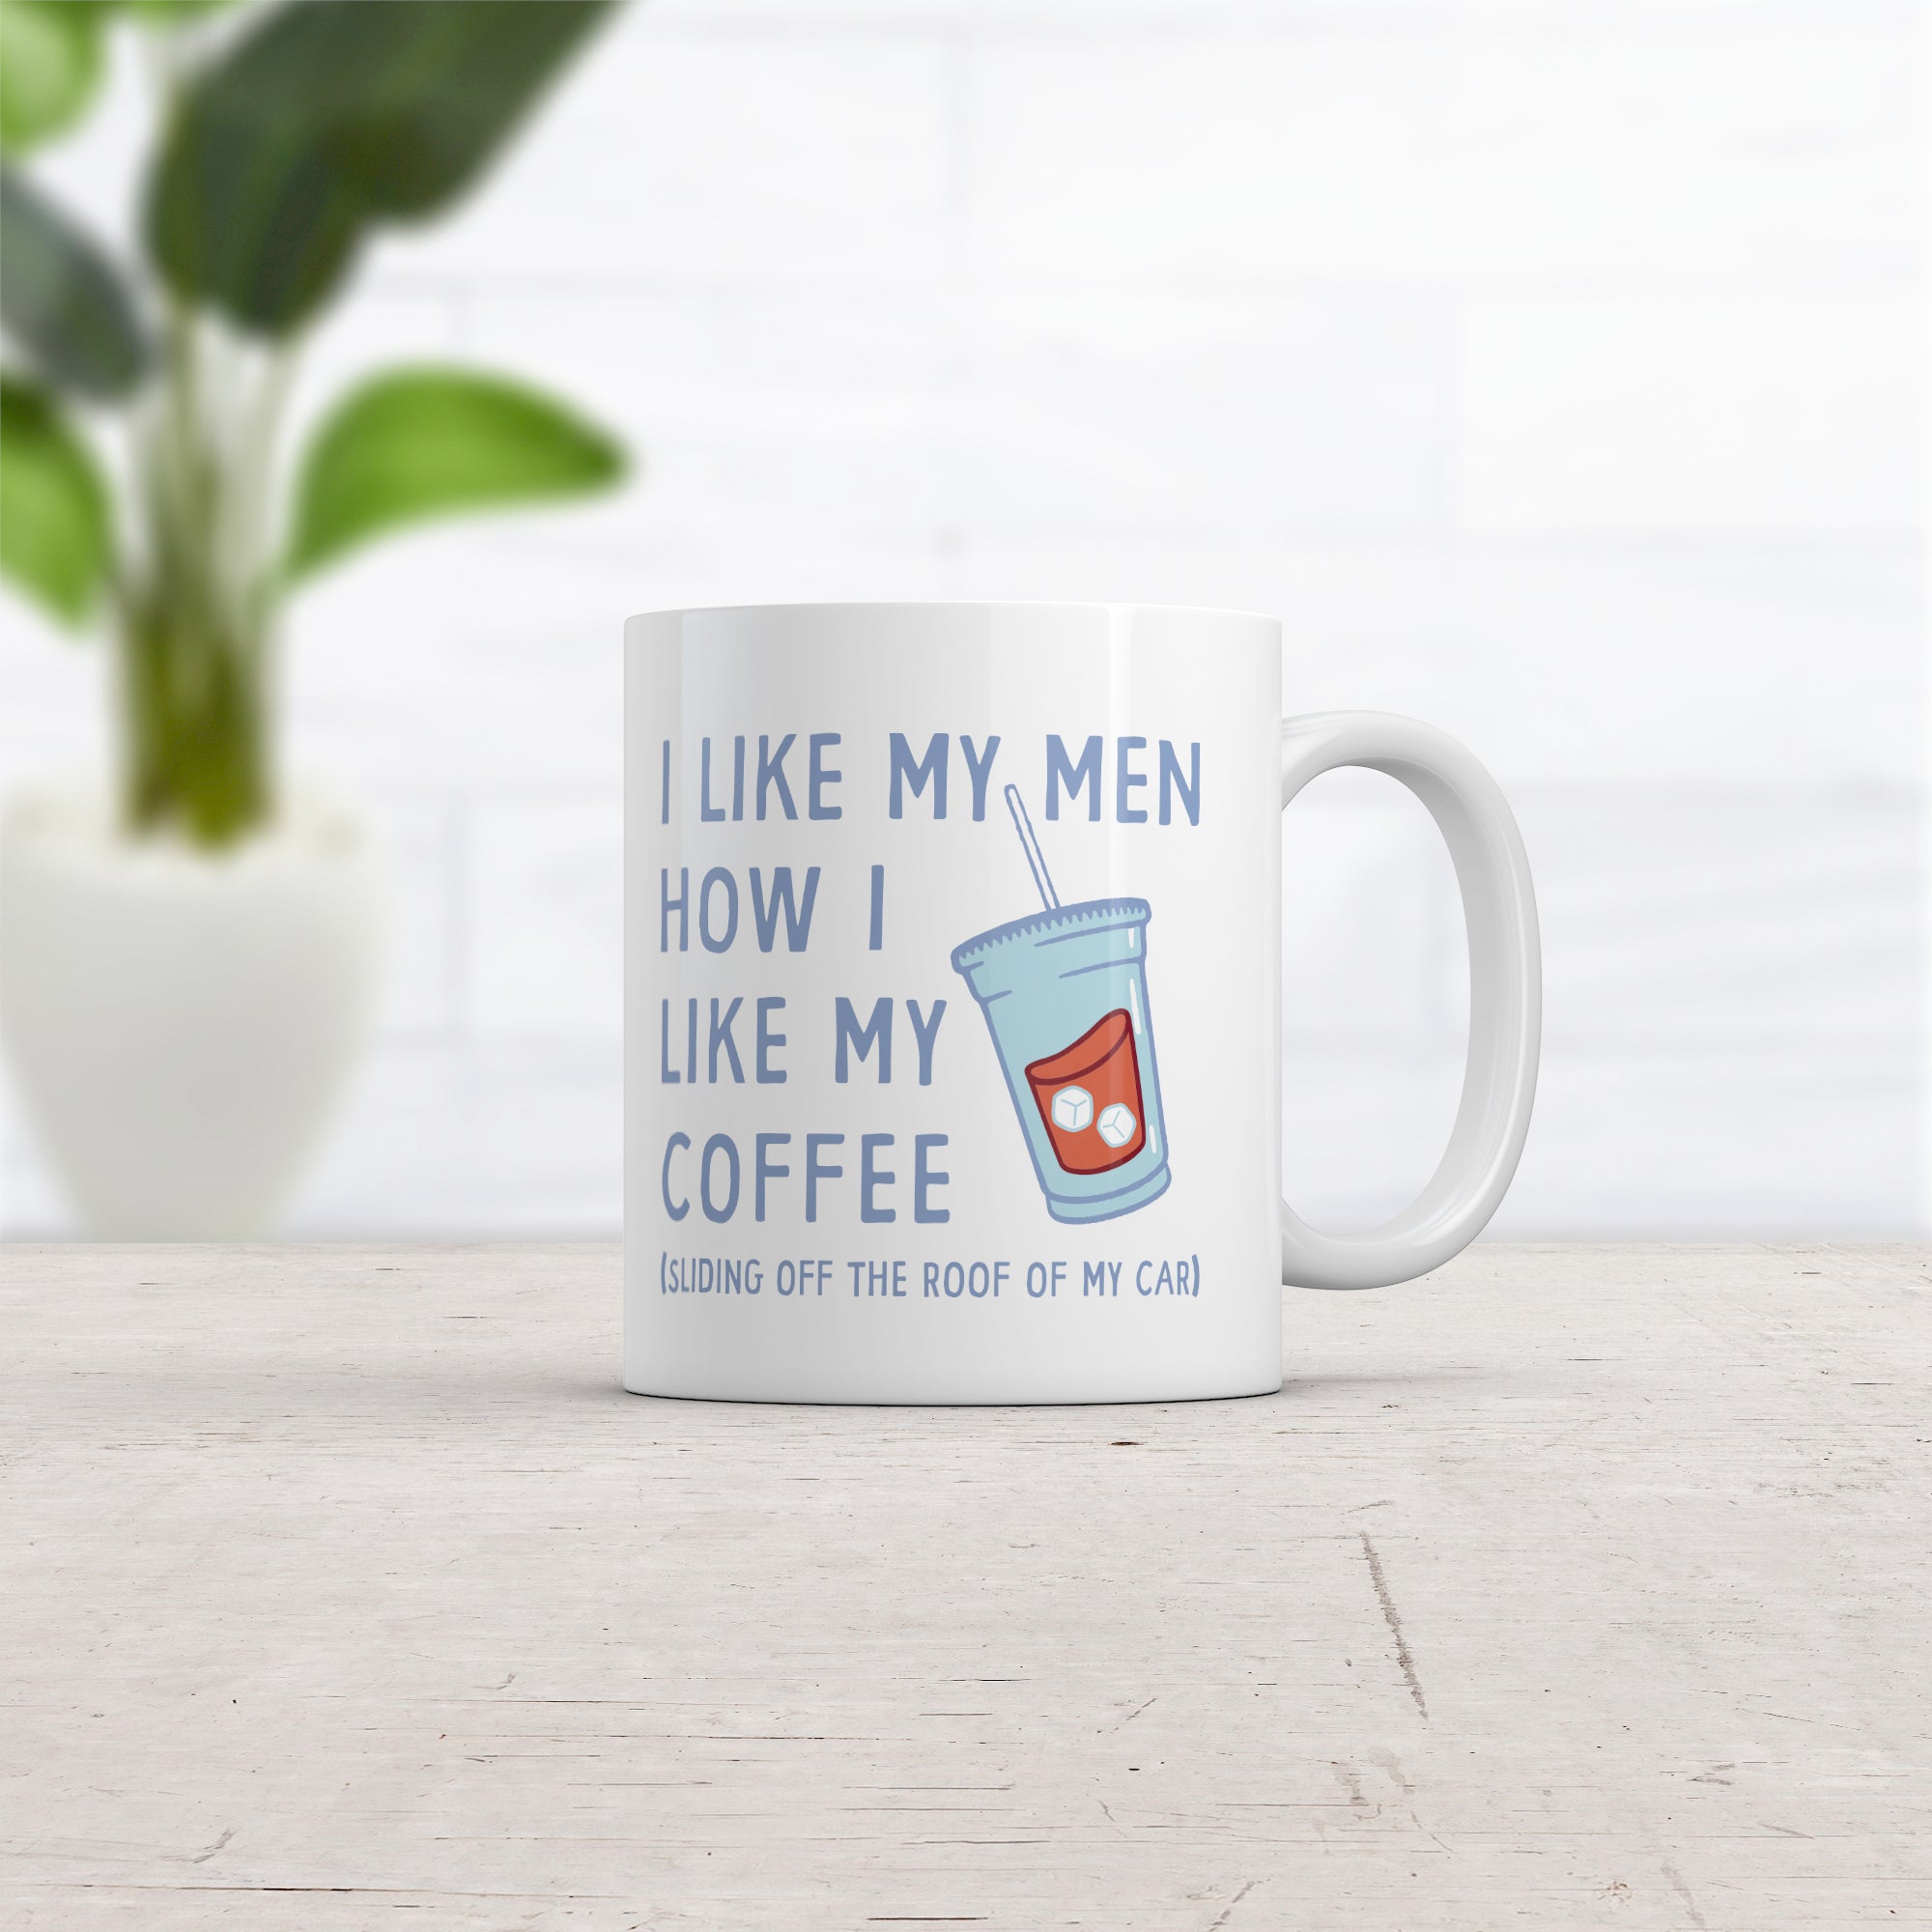 Funny White I Like My Men How I Like My Coffee Coffee Mug Nerdy Coffee Sarcastic Tee